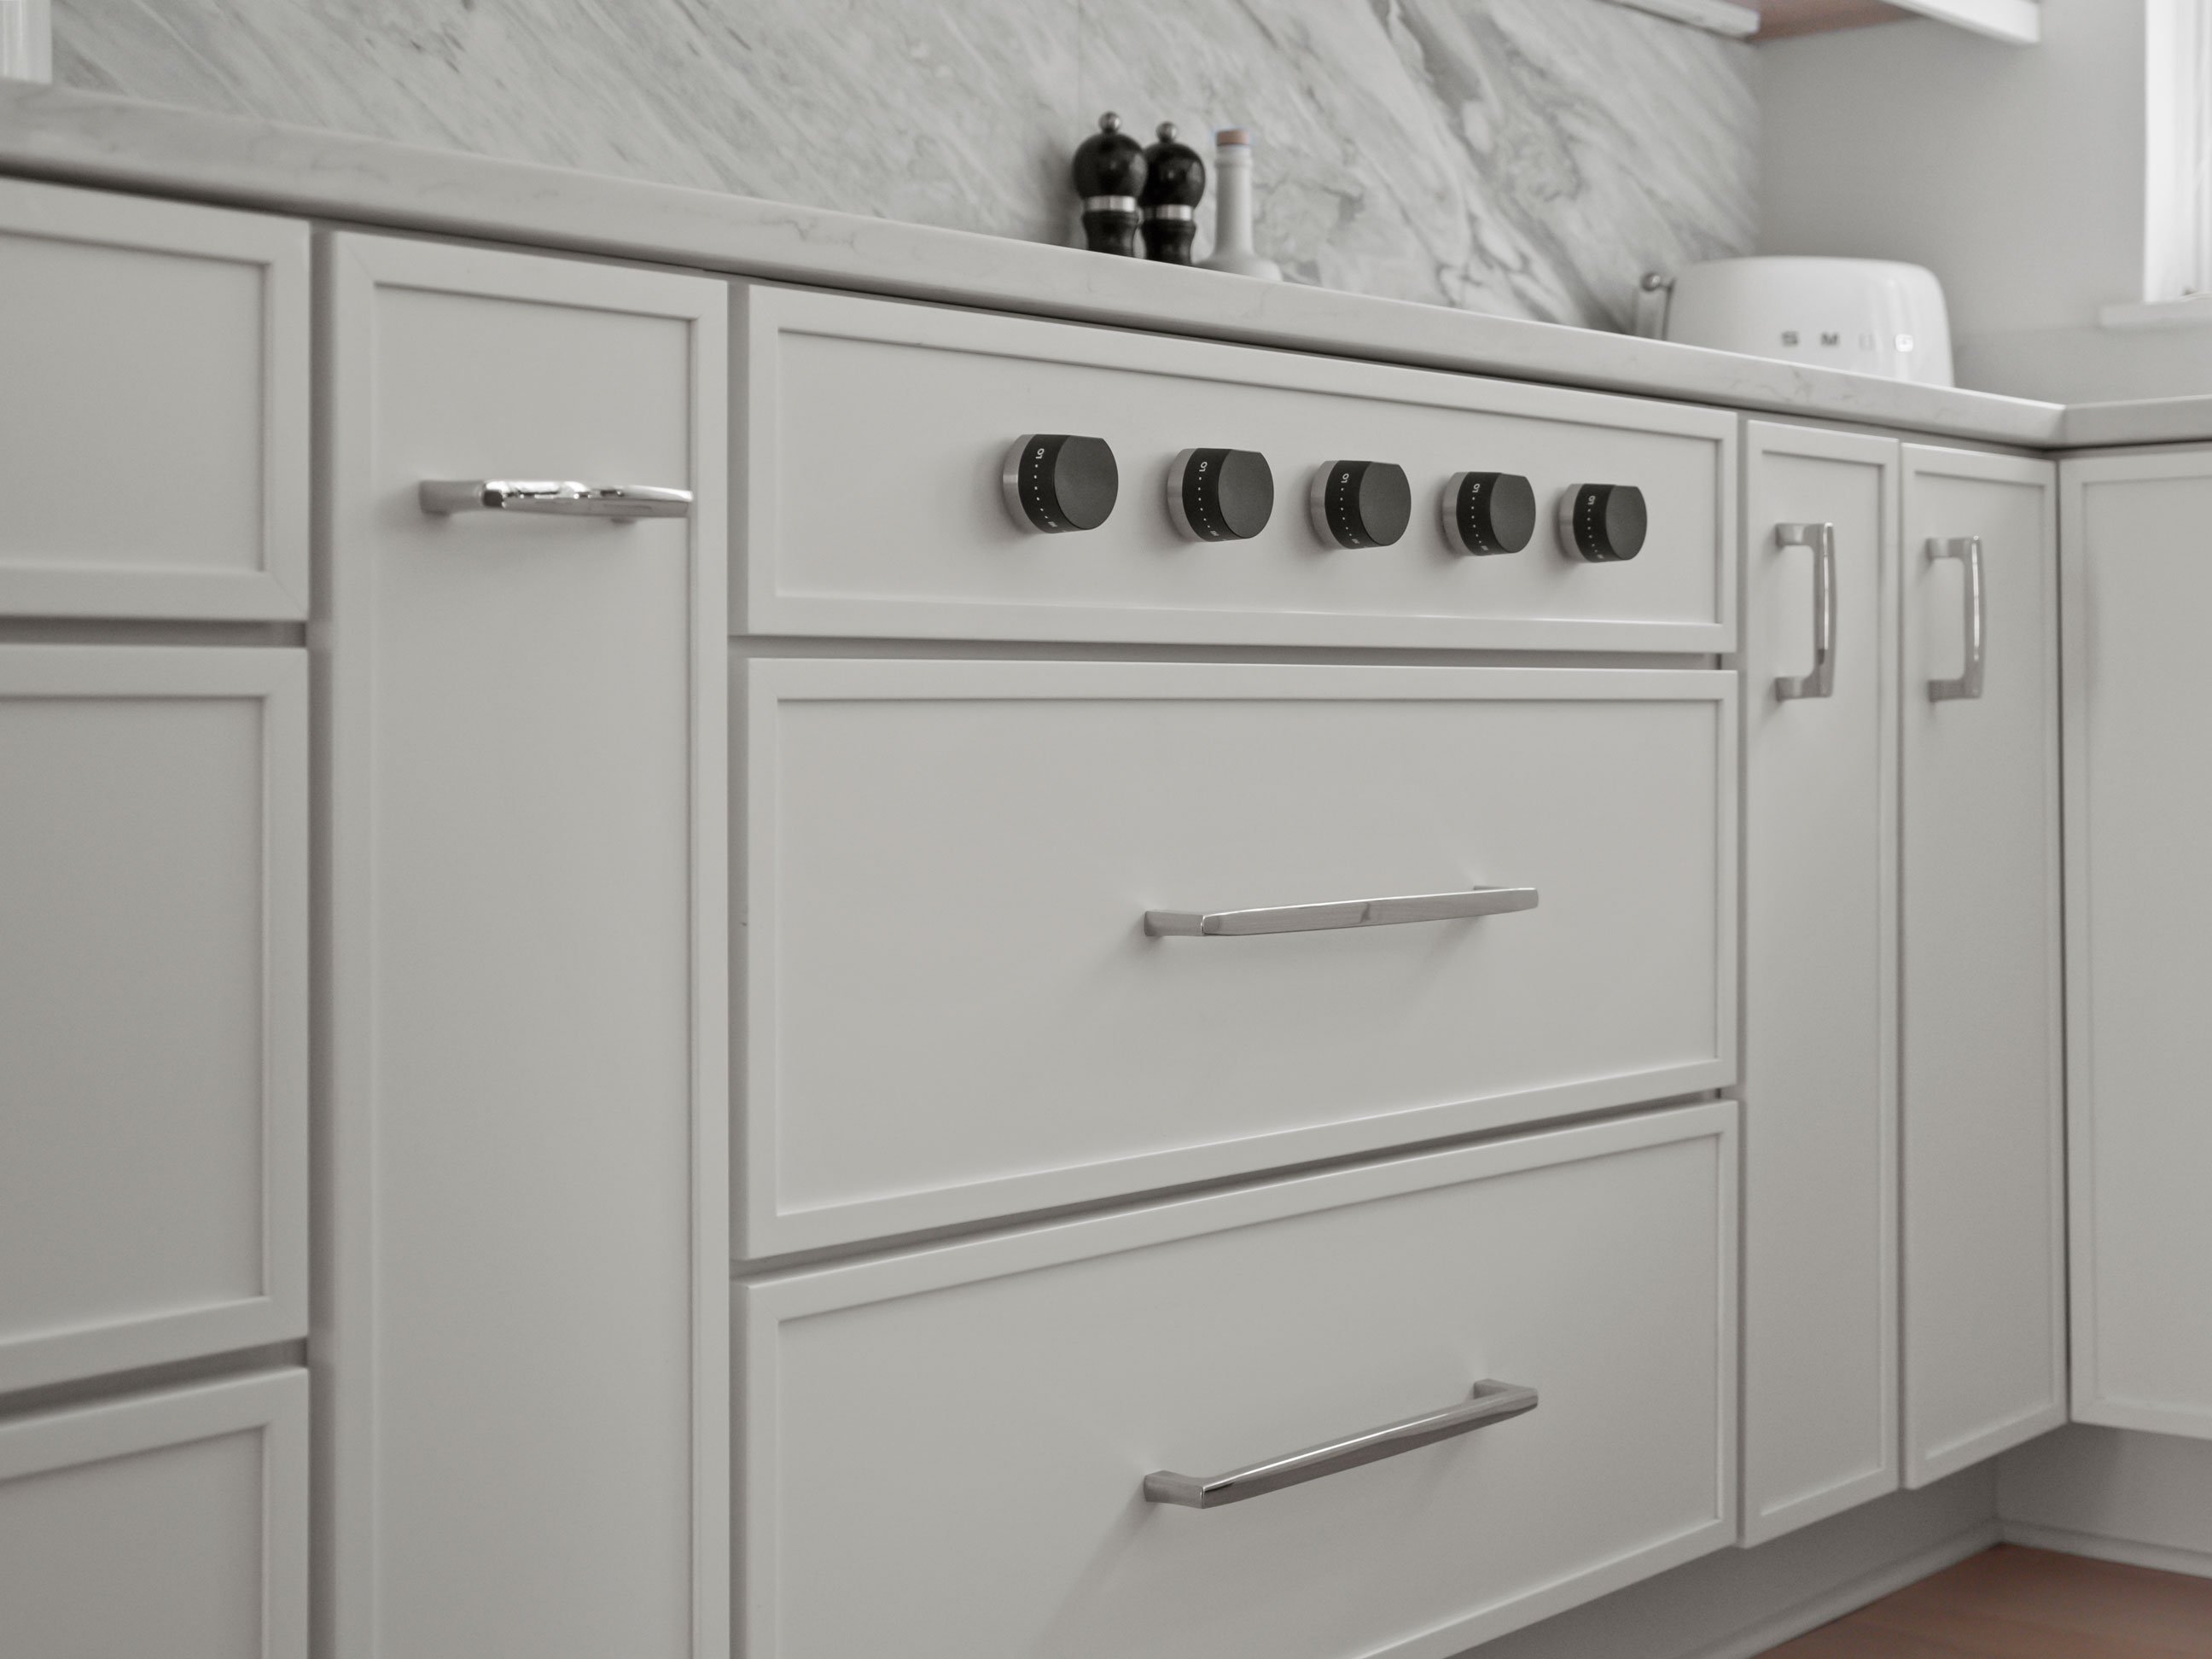 Thin shaker cabinetry creates elegant detail on the kitchen perimeter